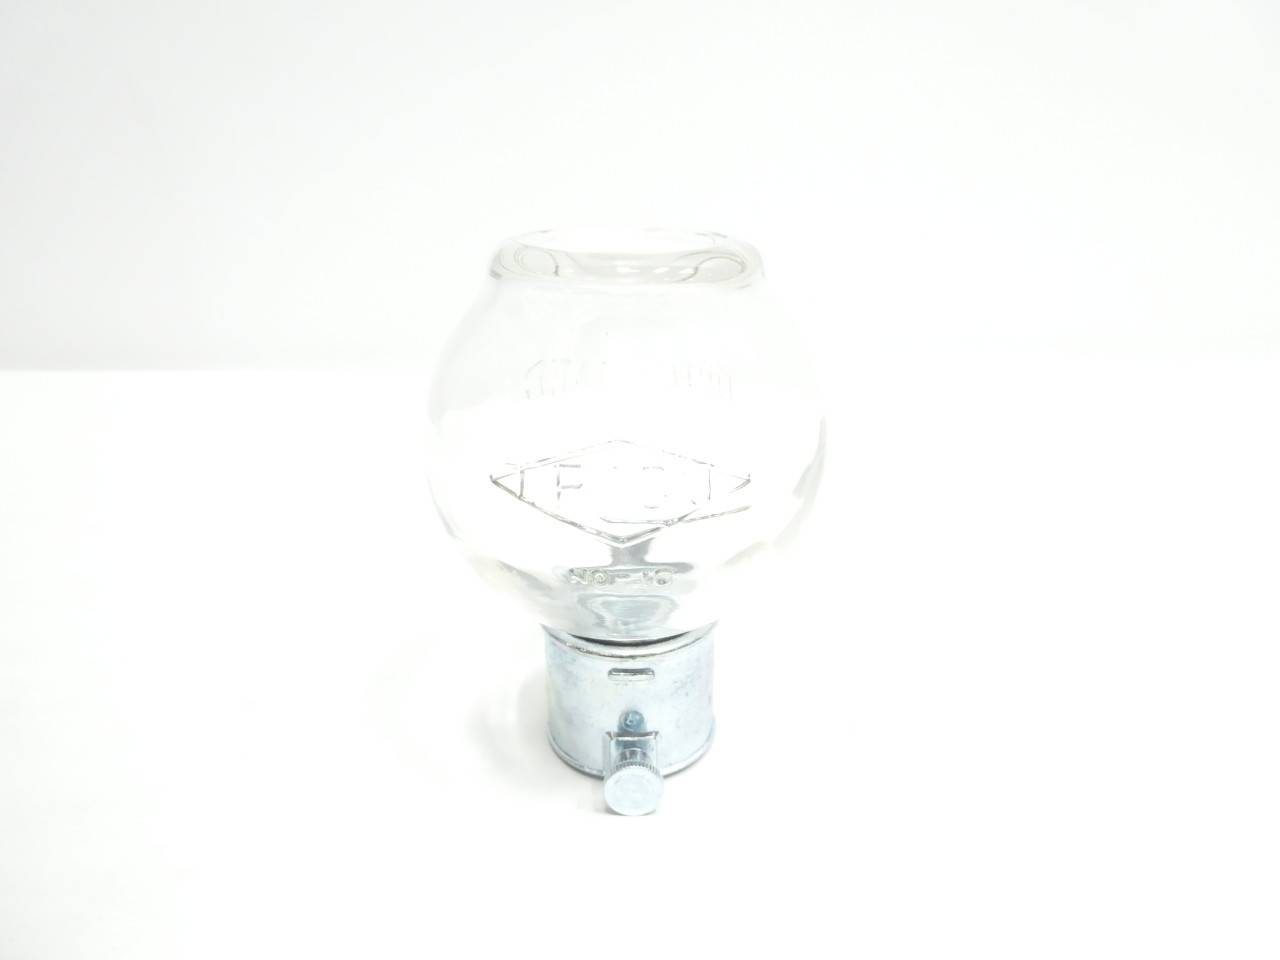 Trico Optomatic Oiler Glass 16oz 30010